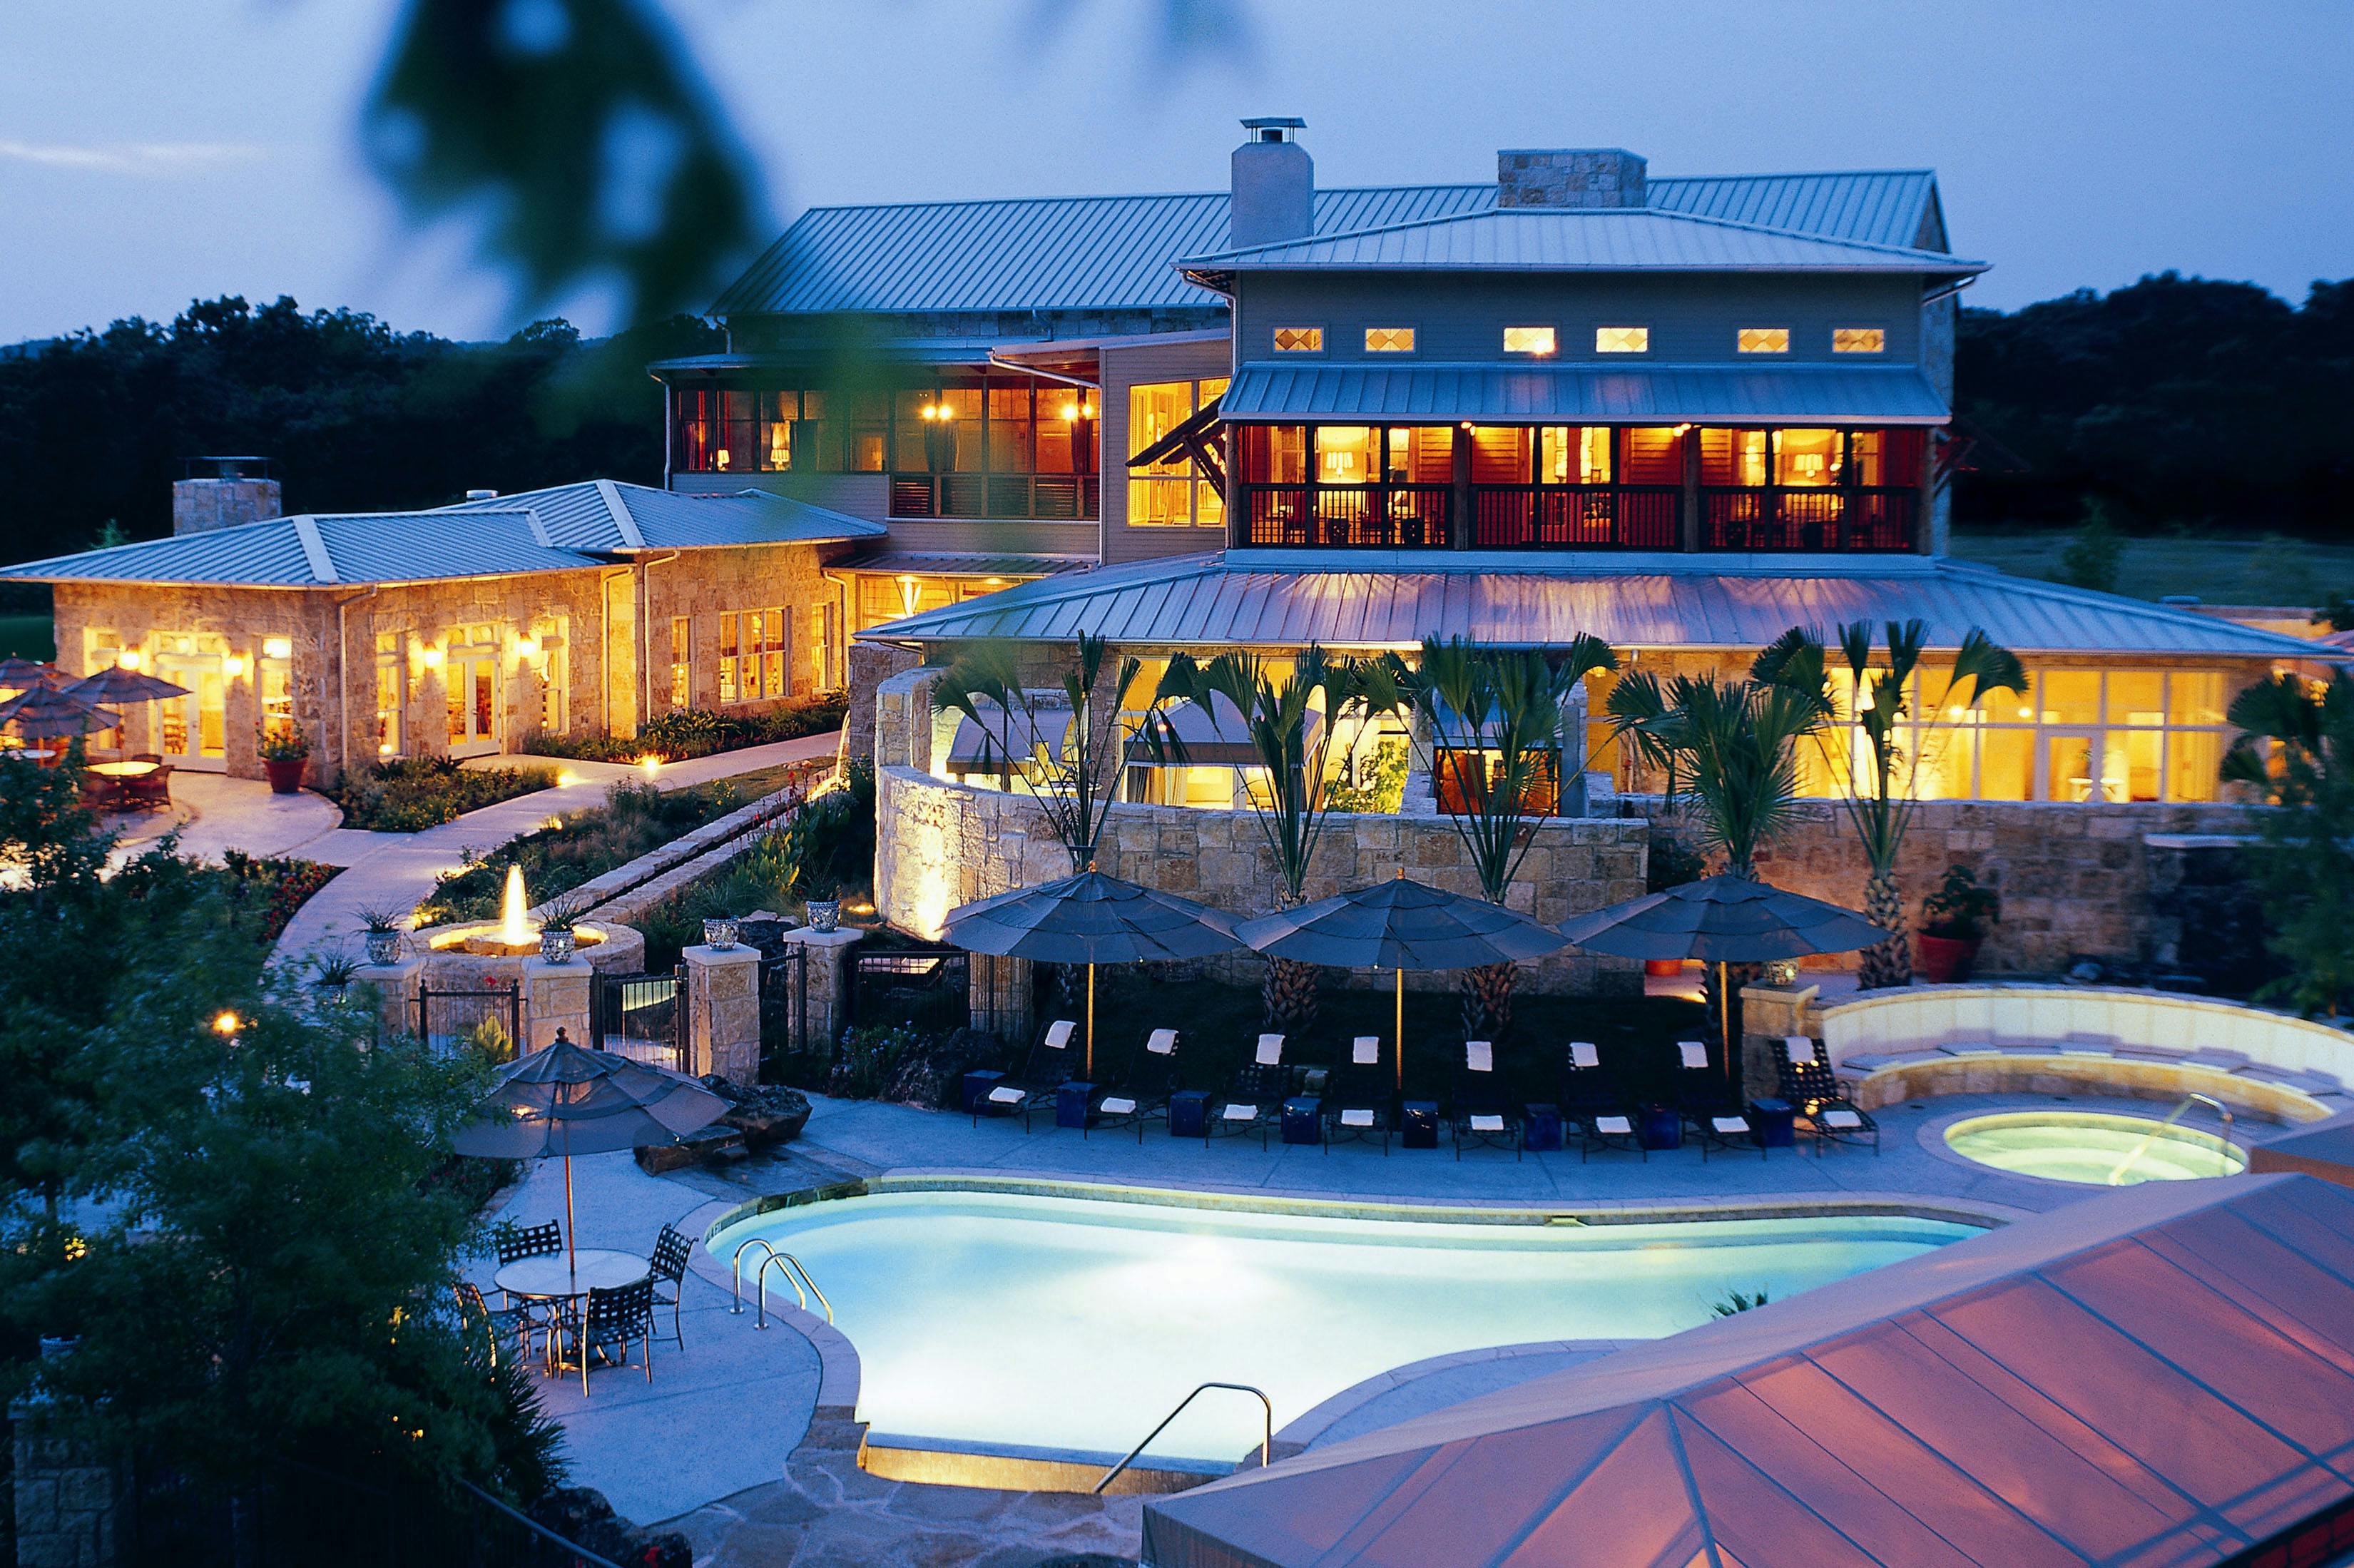 Lake Austin Spa Resort: Lake House Spa | Jackson & McElhaney Architects